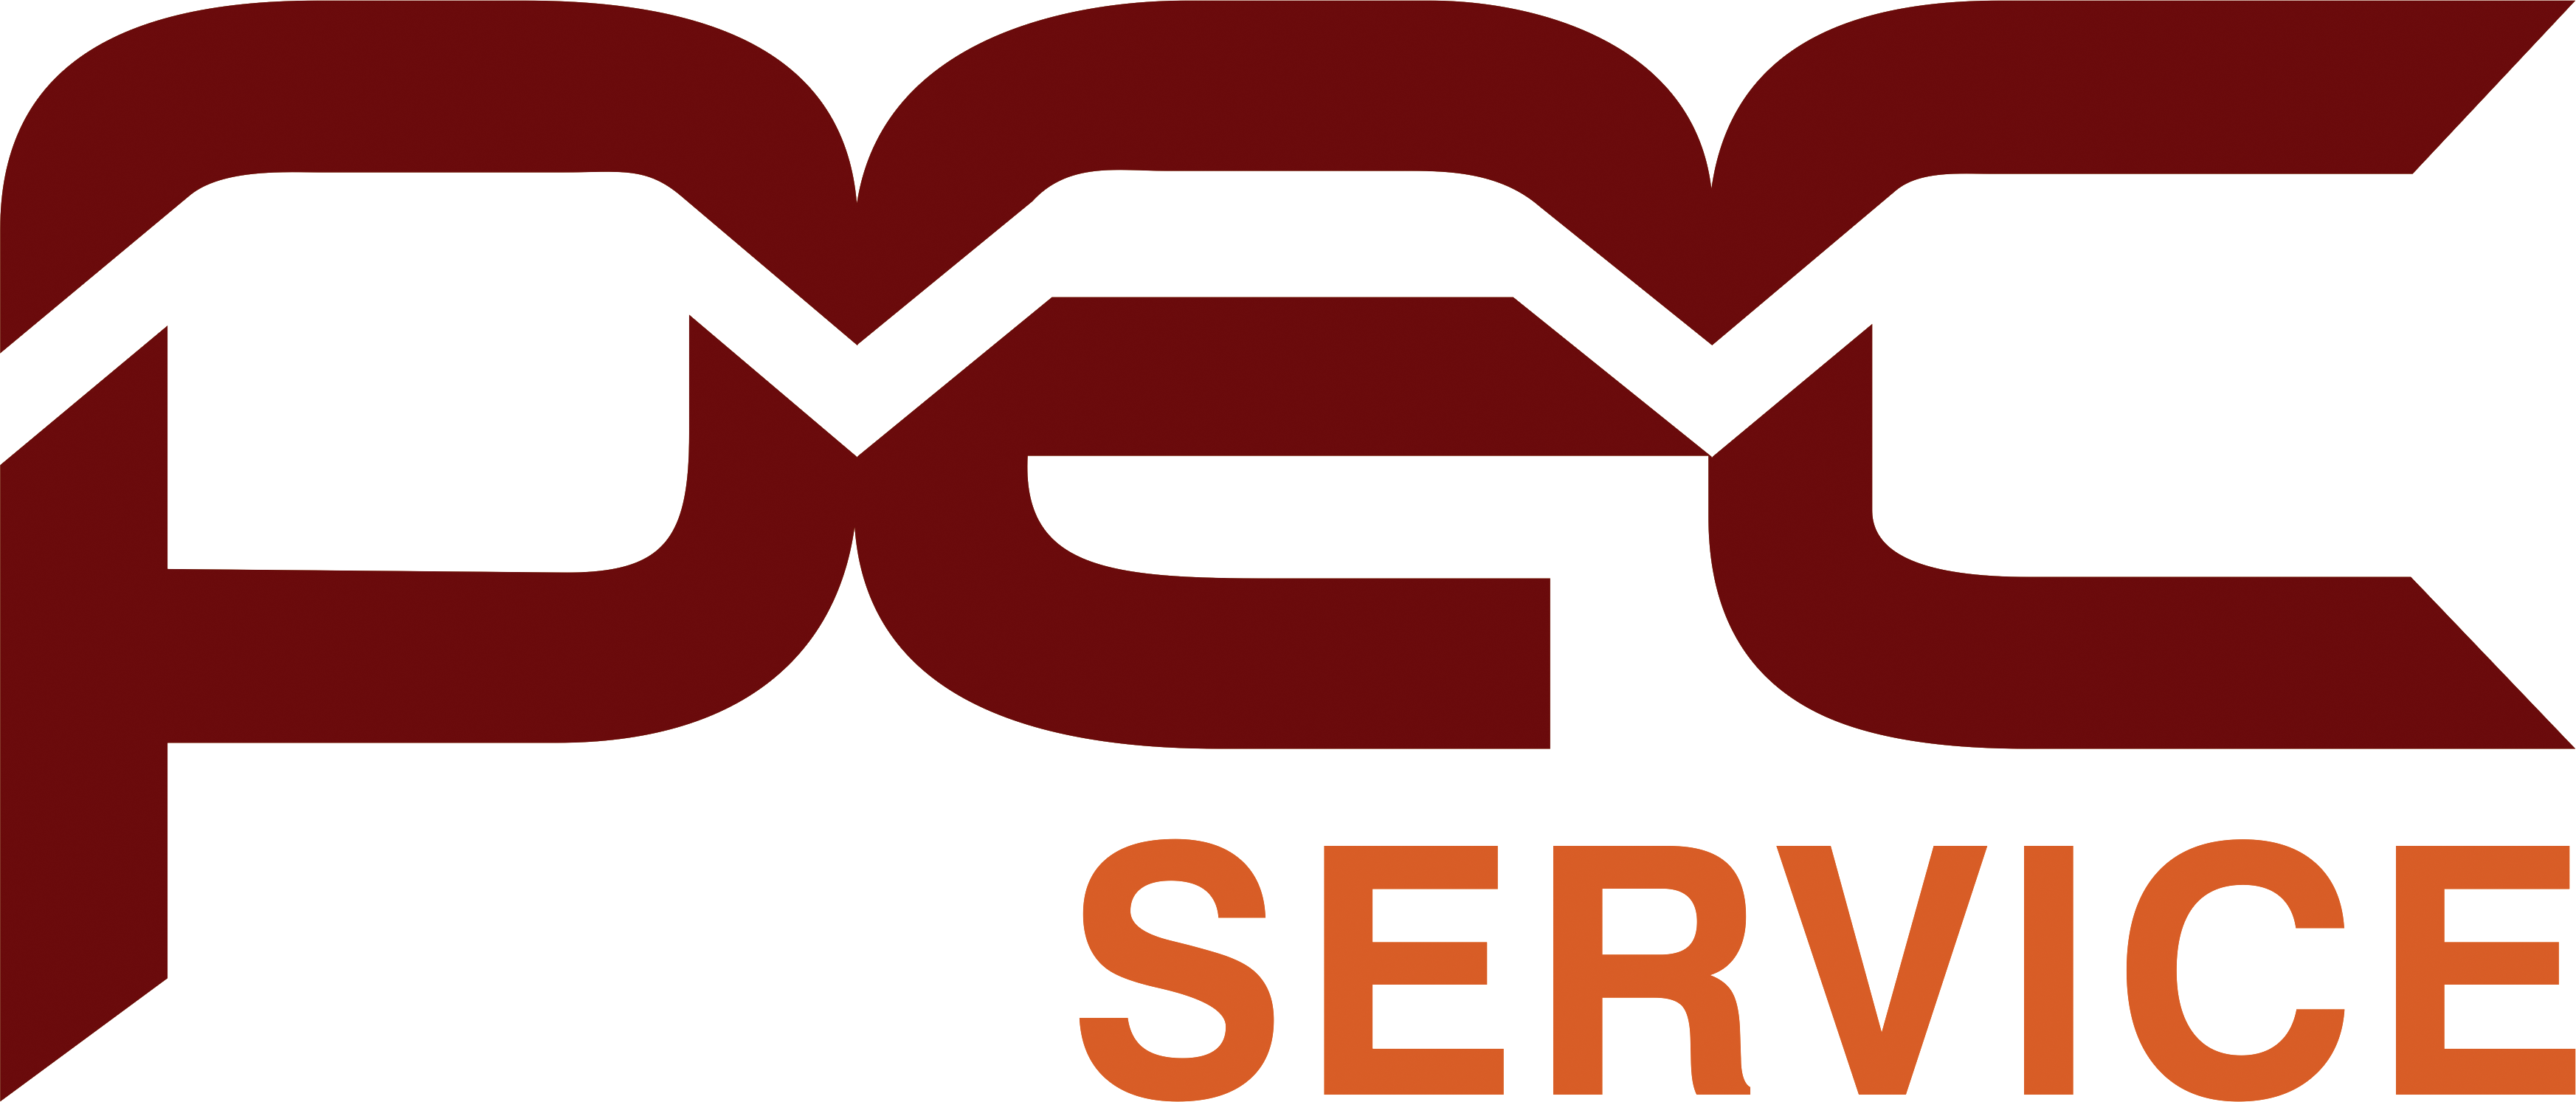 Logo Pec Service final